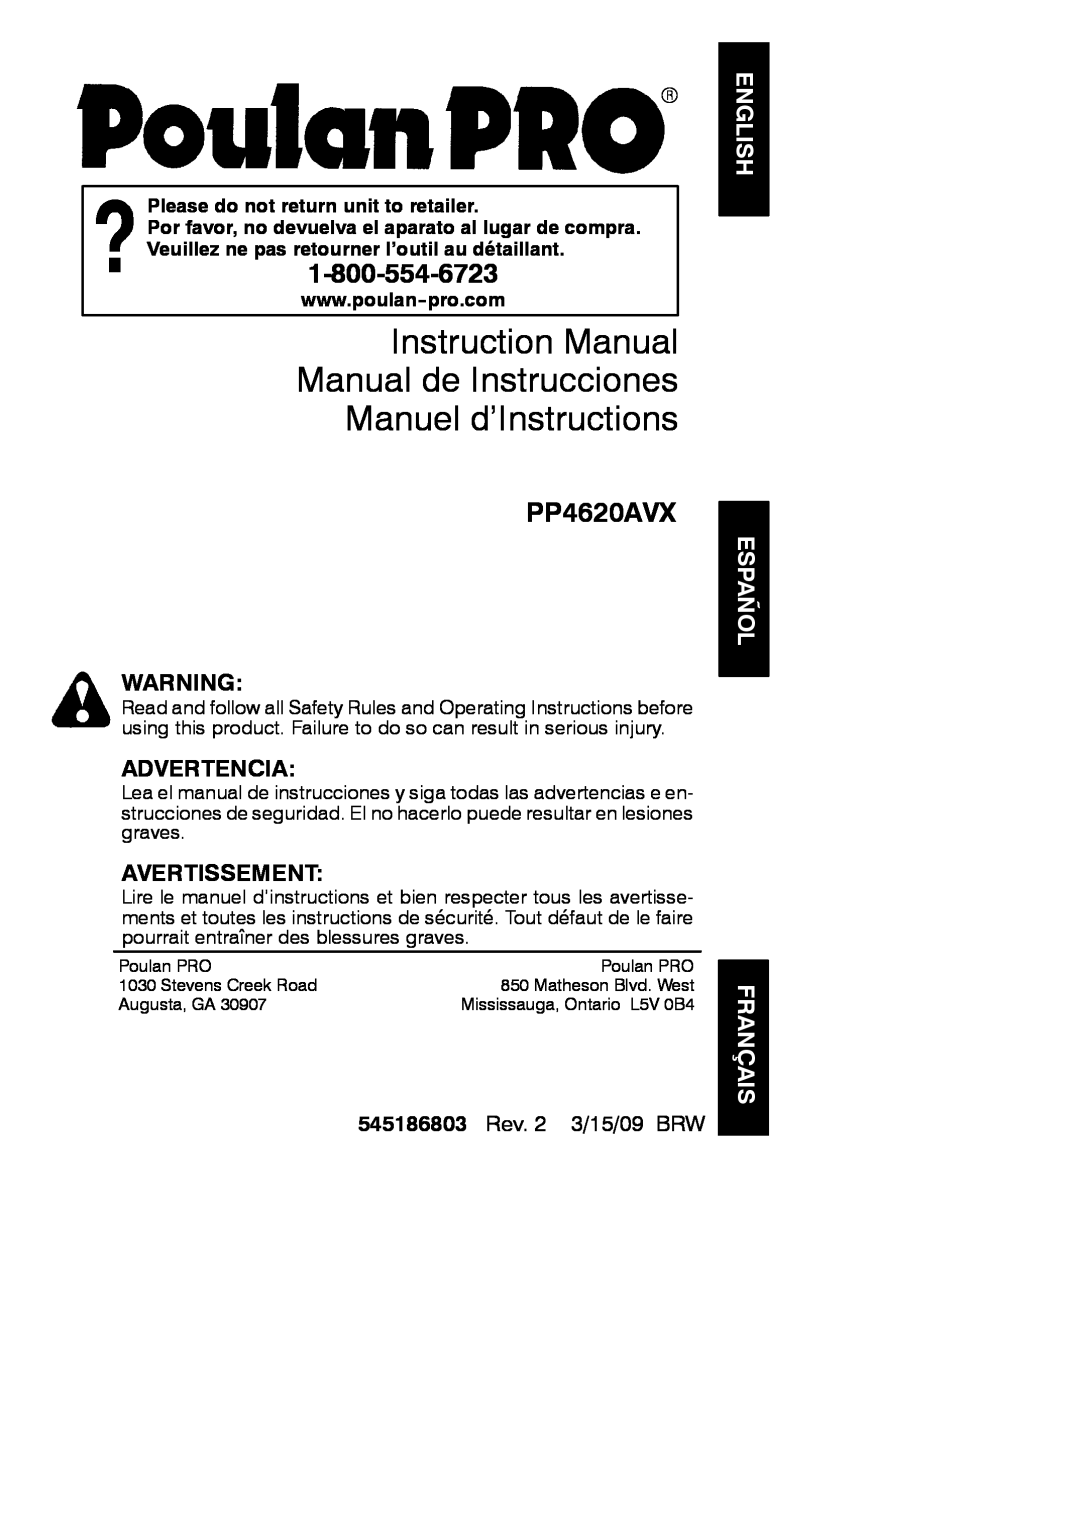 Poulan 545186803 instruction manual English Español Français, Manuel d’Instructions, PP4620AVX, Advertencia, Avertissement 